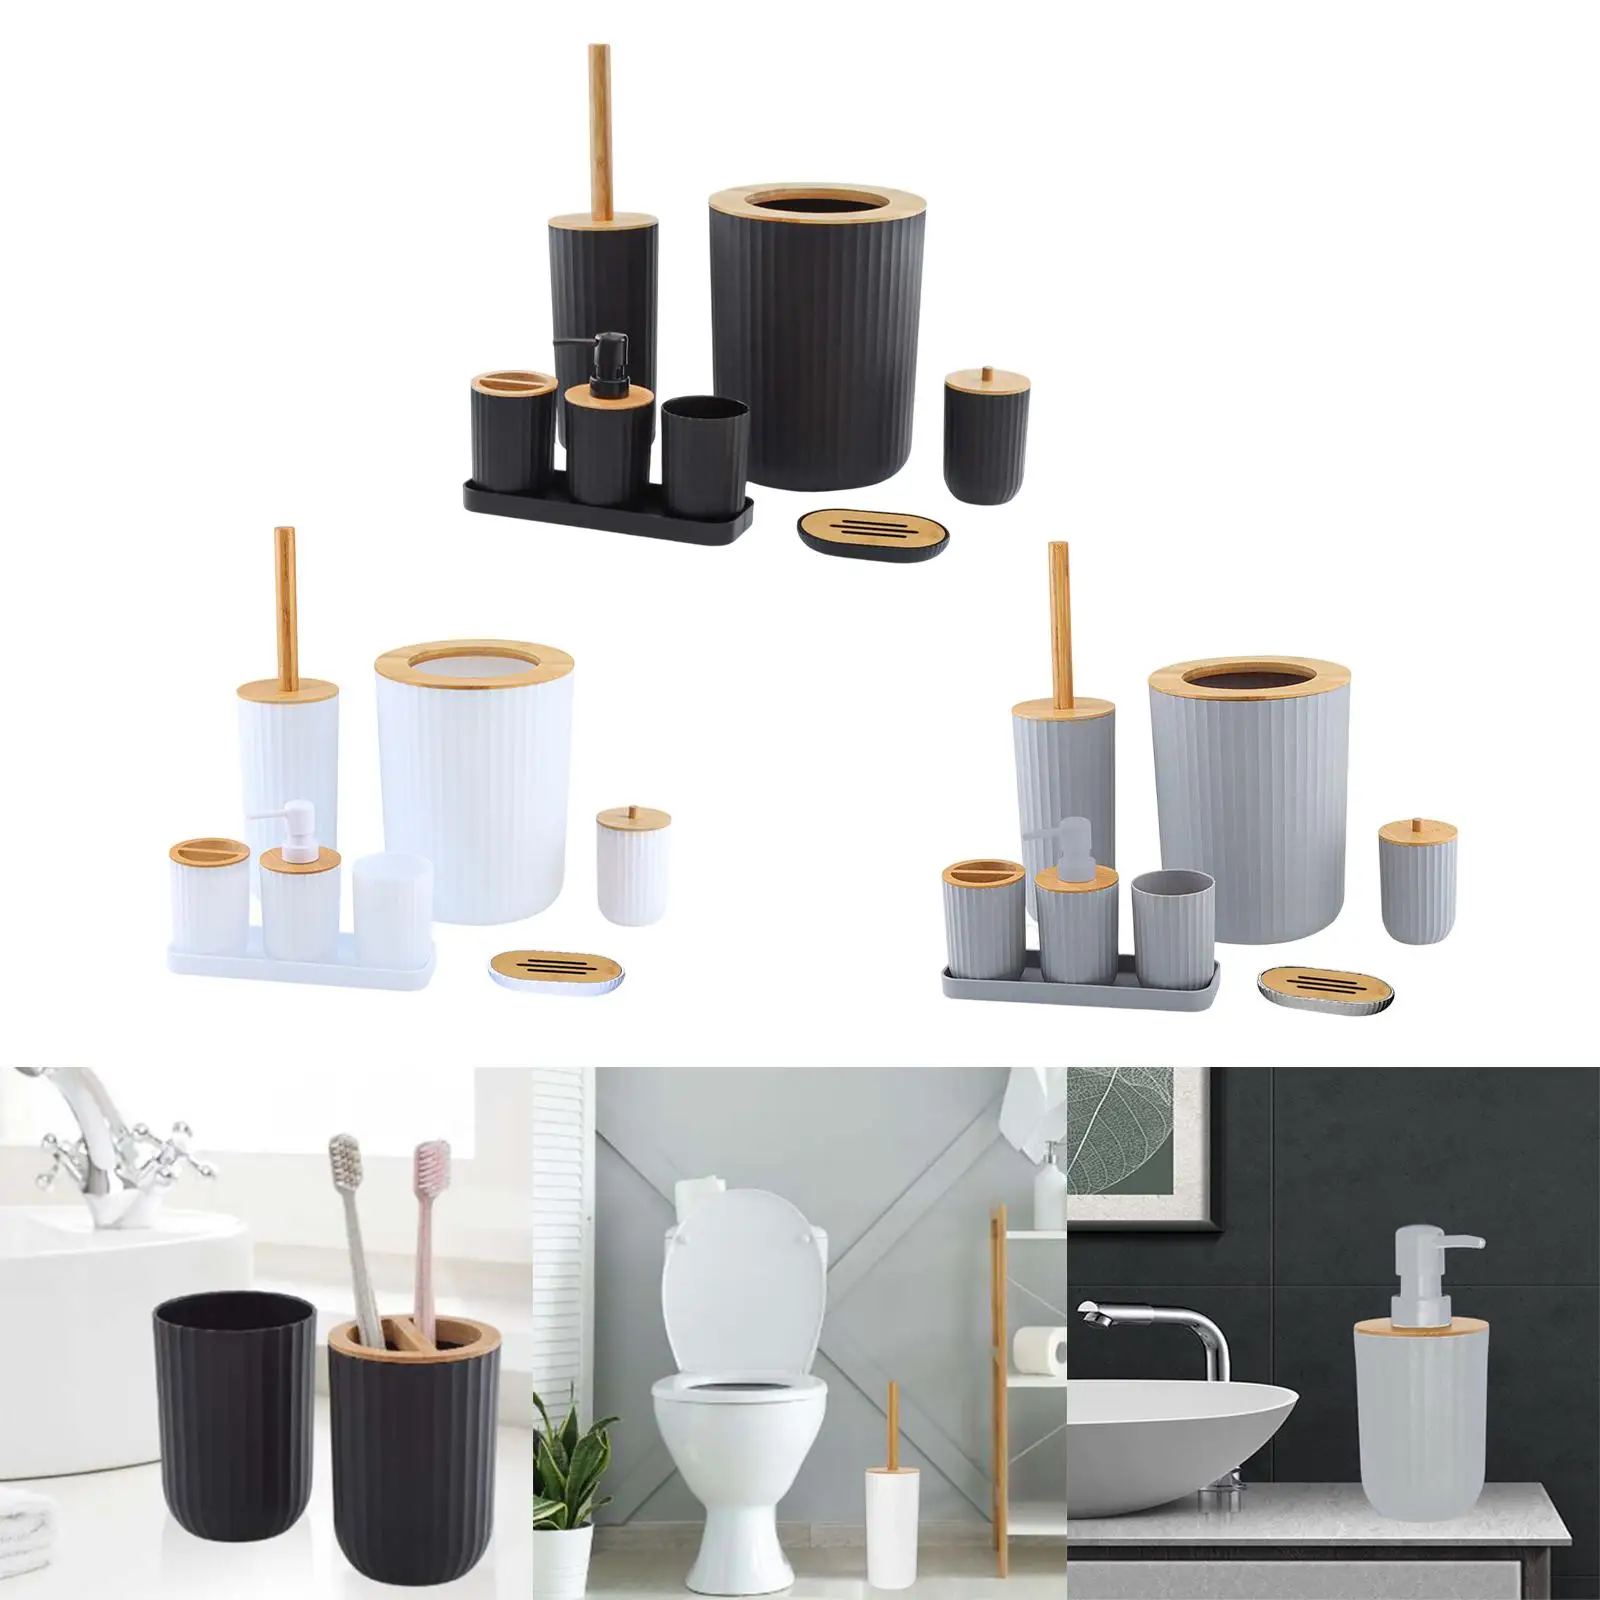 7 Pieces Simple Bathroom Accessory Set Decorative Toilet Brush & Holder Set Plastic for Office Clubs Bathroom Home Organization